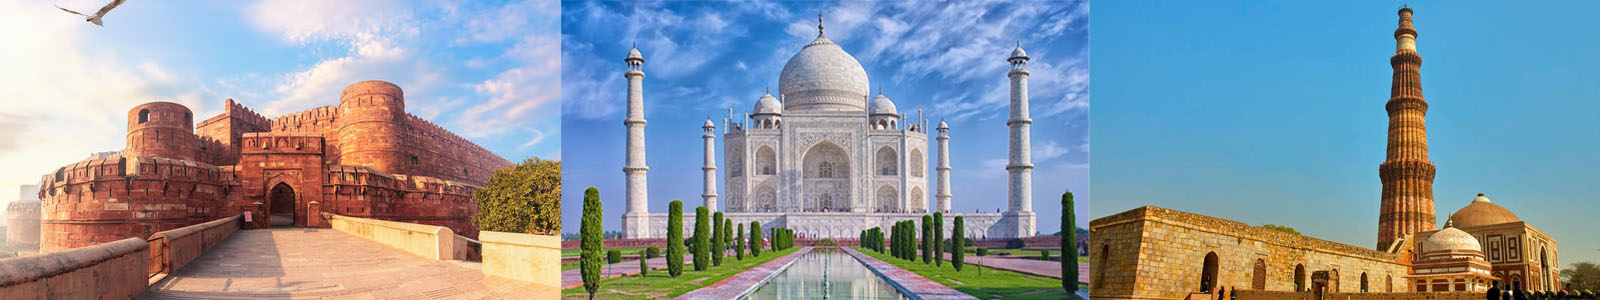 Taj Mahal Guided Private Tour From Delhi